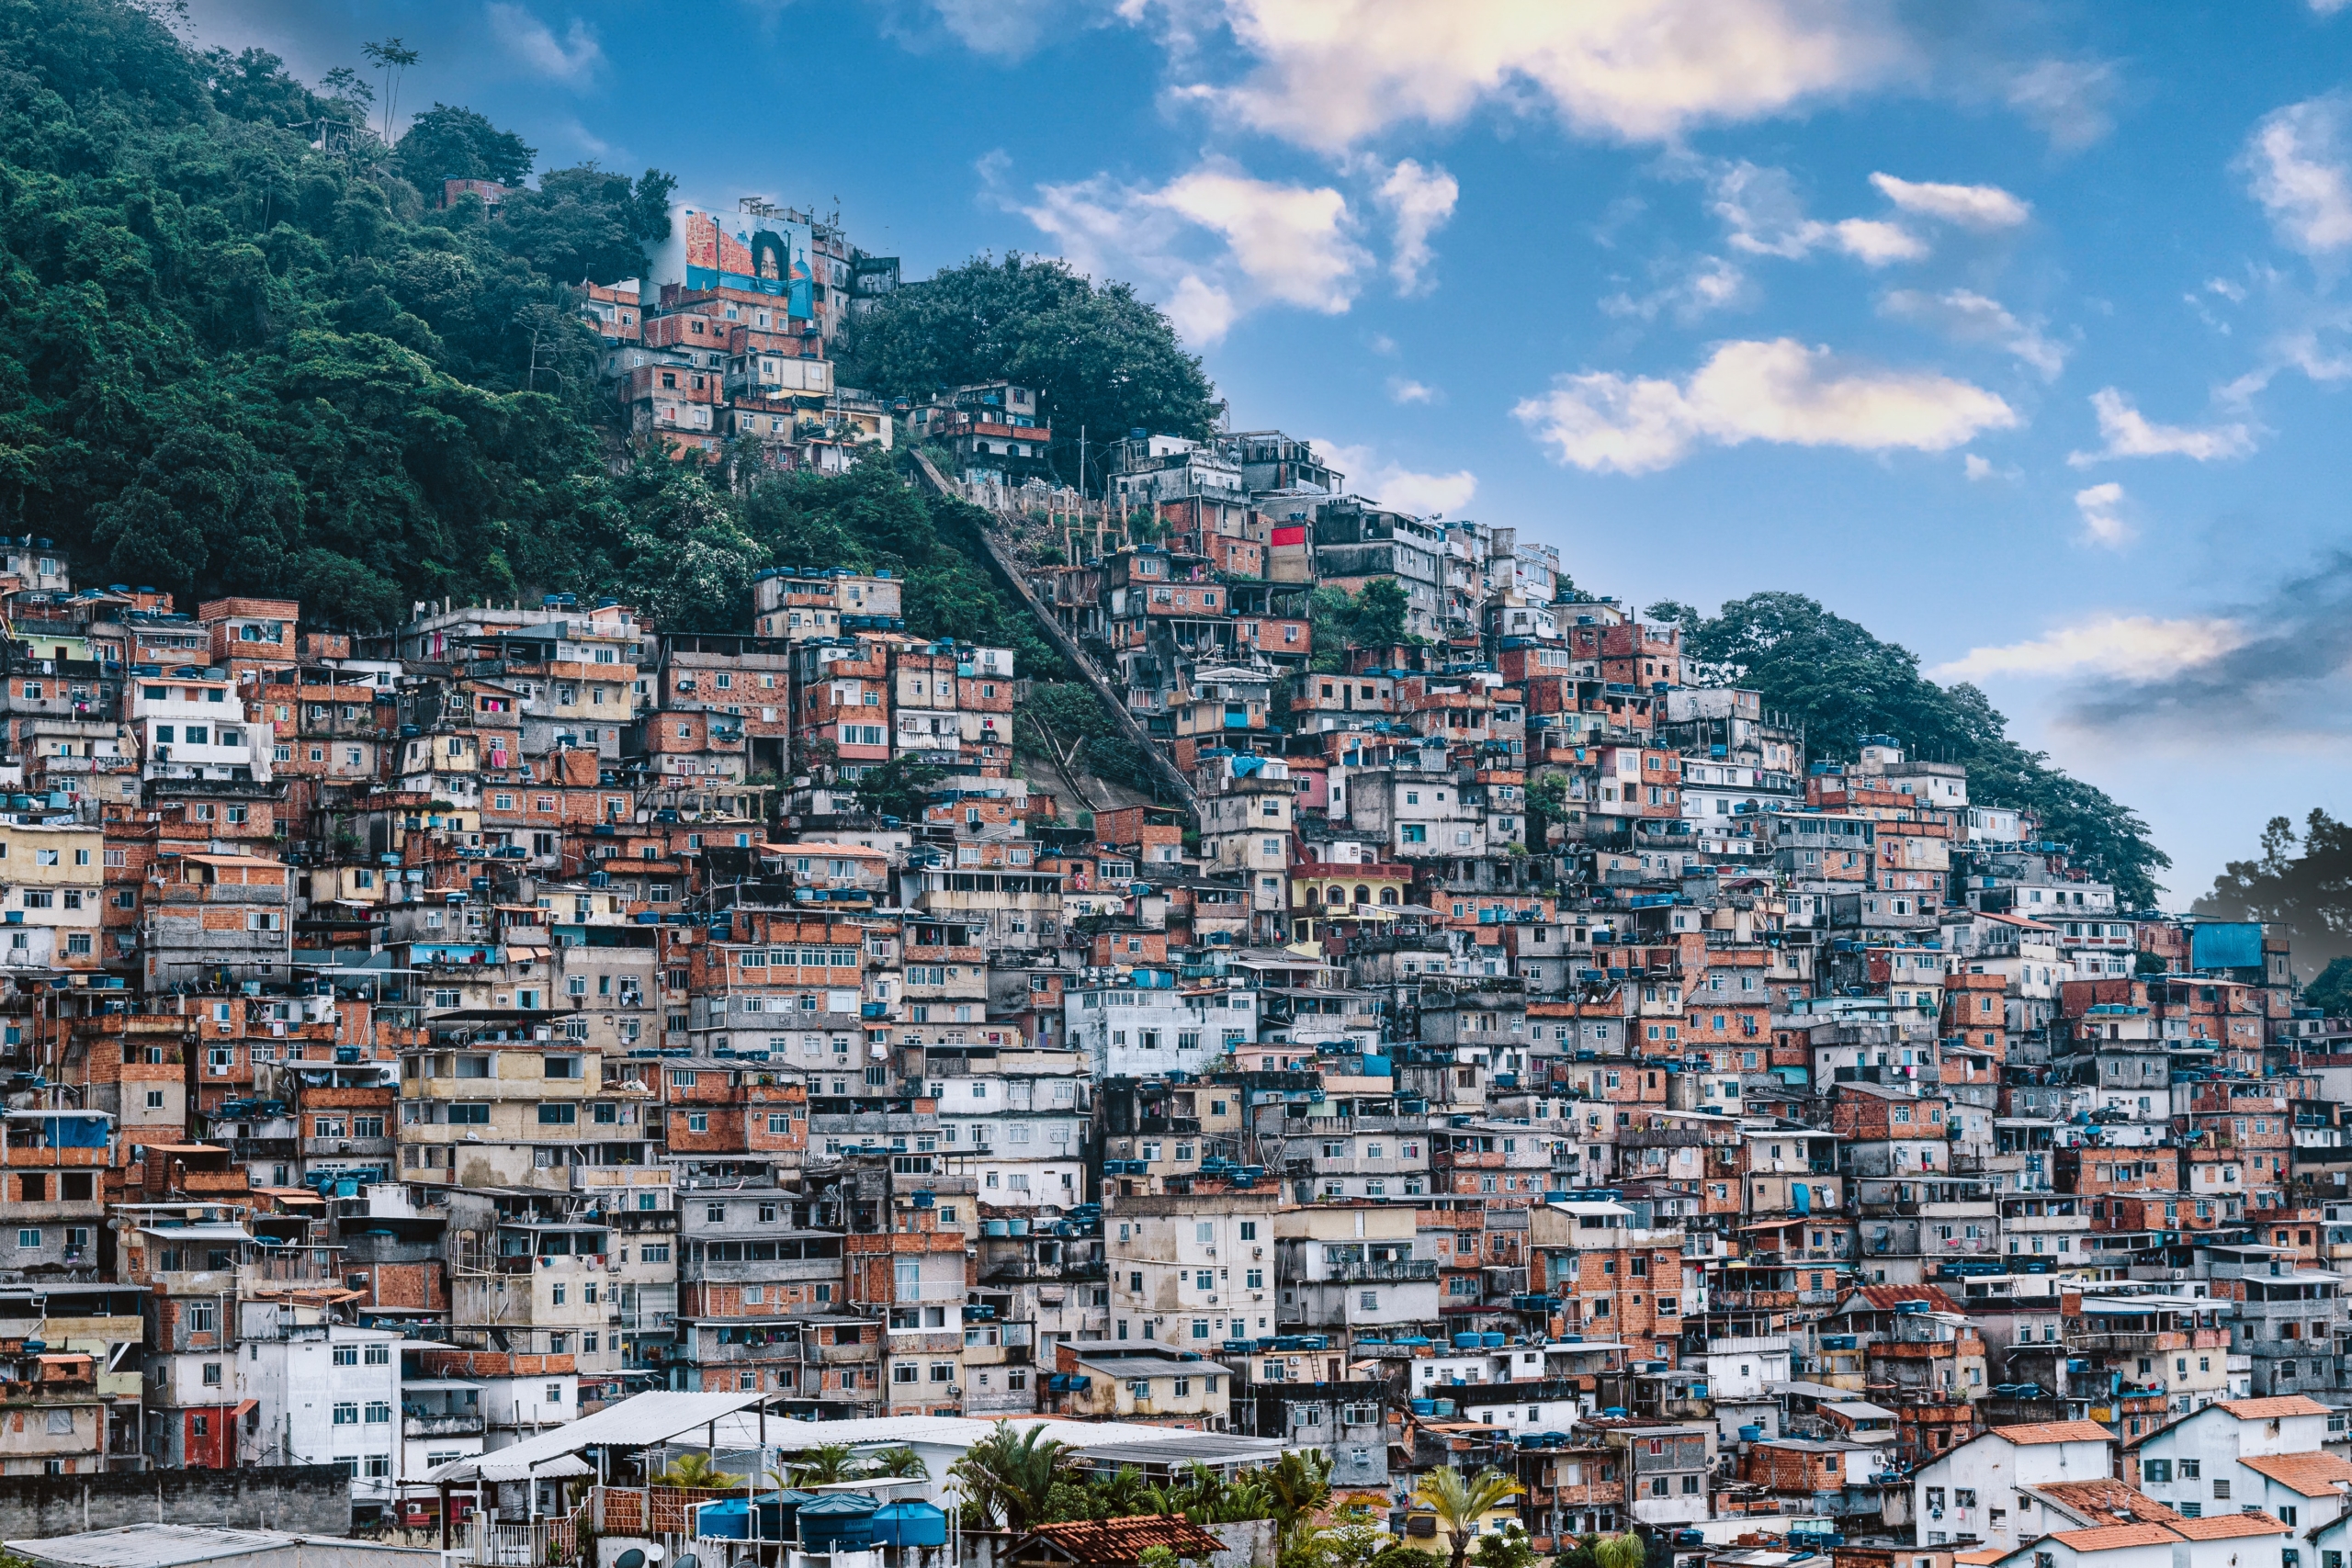 https://borgenproject.org/wp-content/uploads/Rio-de-Janeiros-Favelas-scaled.jpg